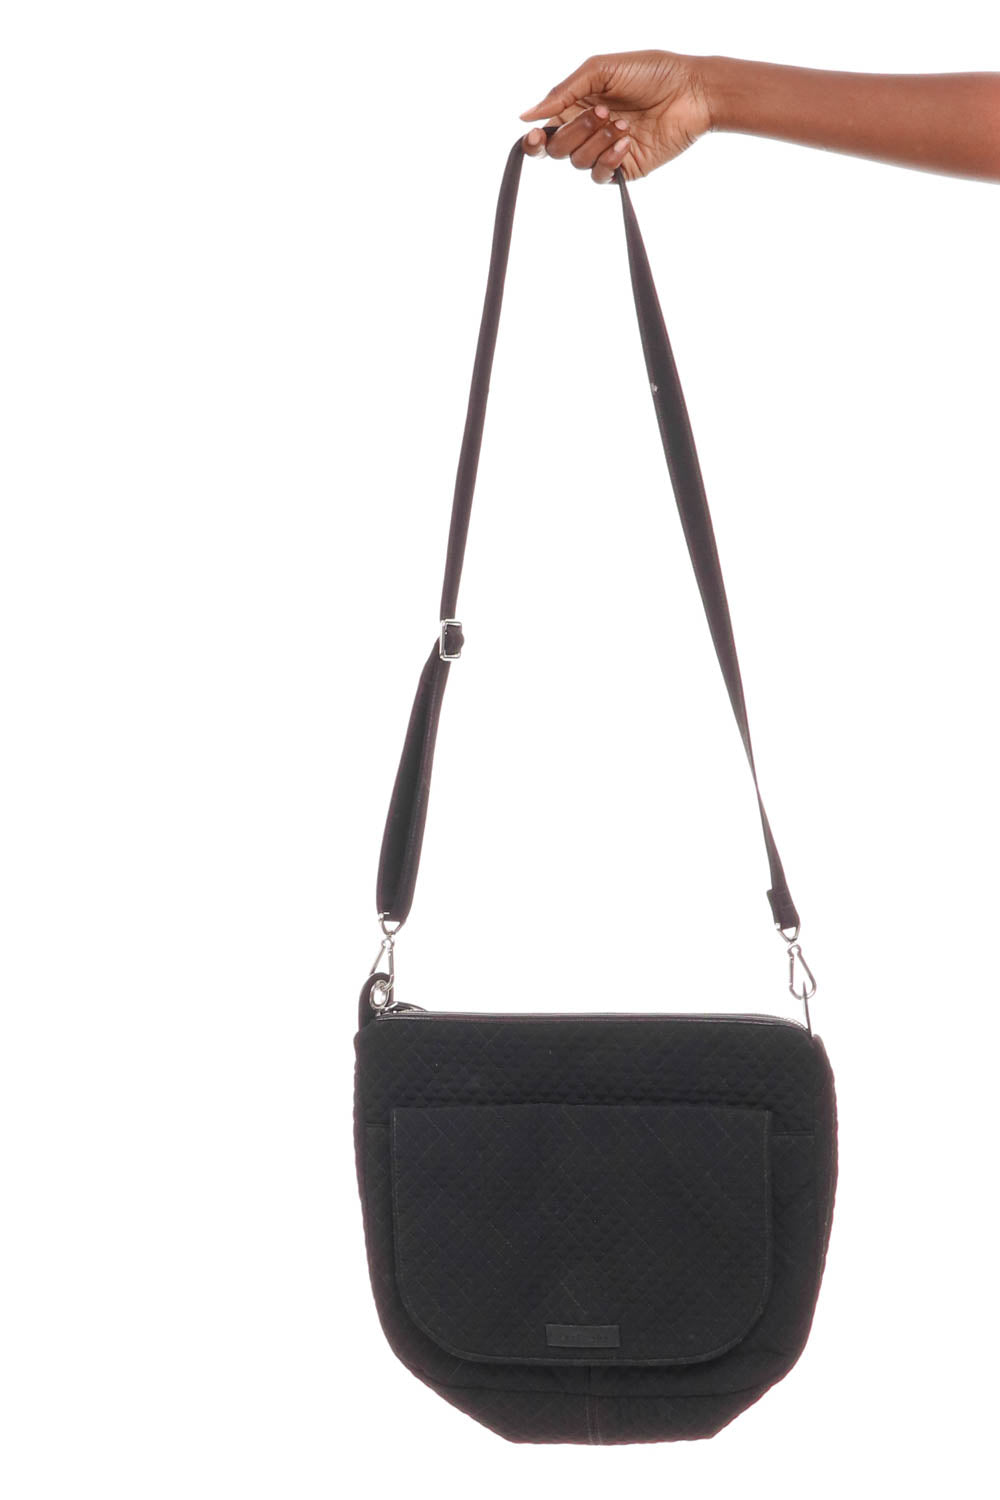 Vera Bradley Black Vintage Handbags | Mercari